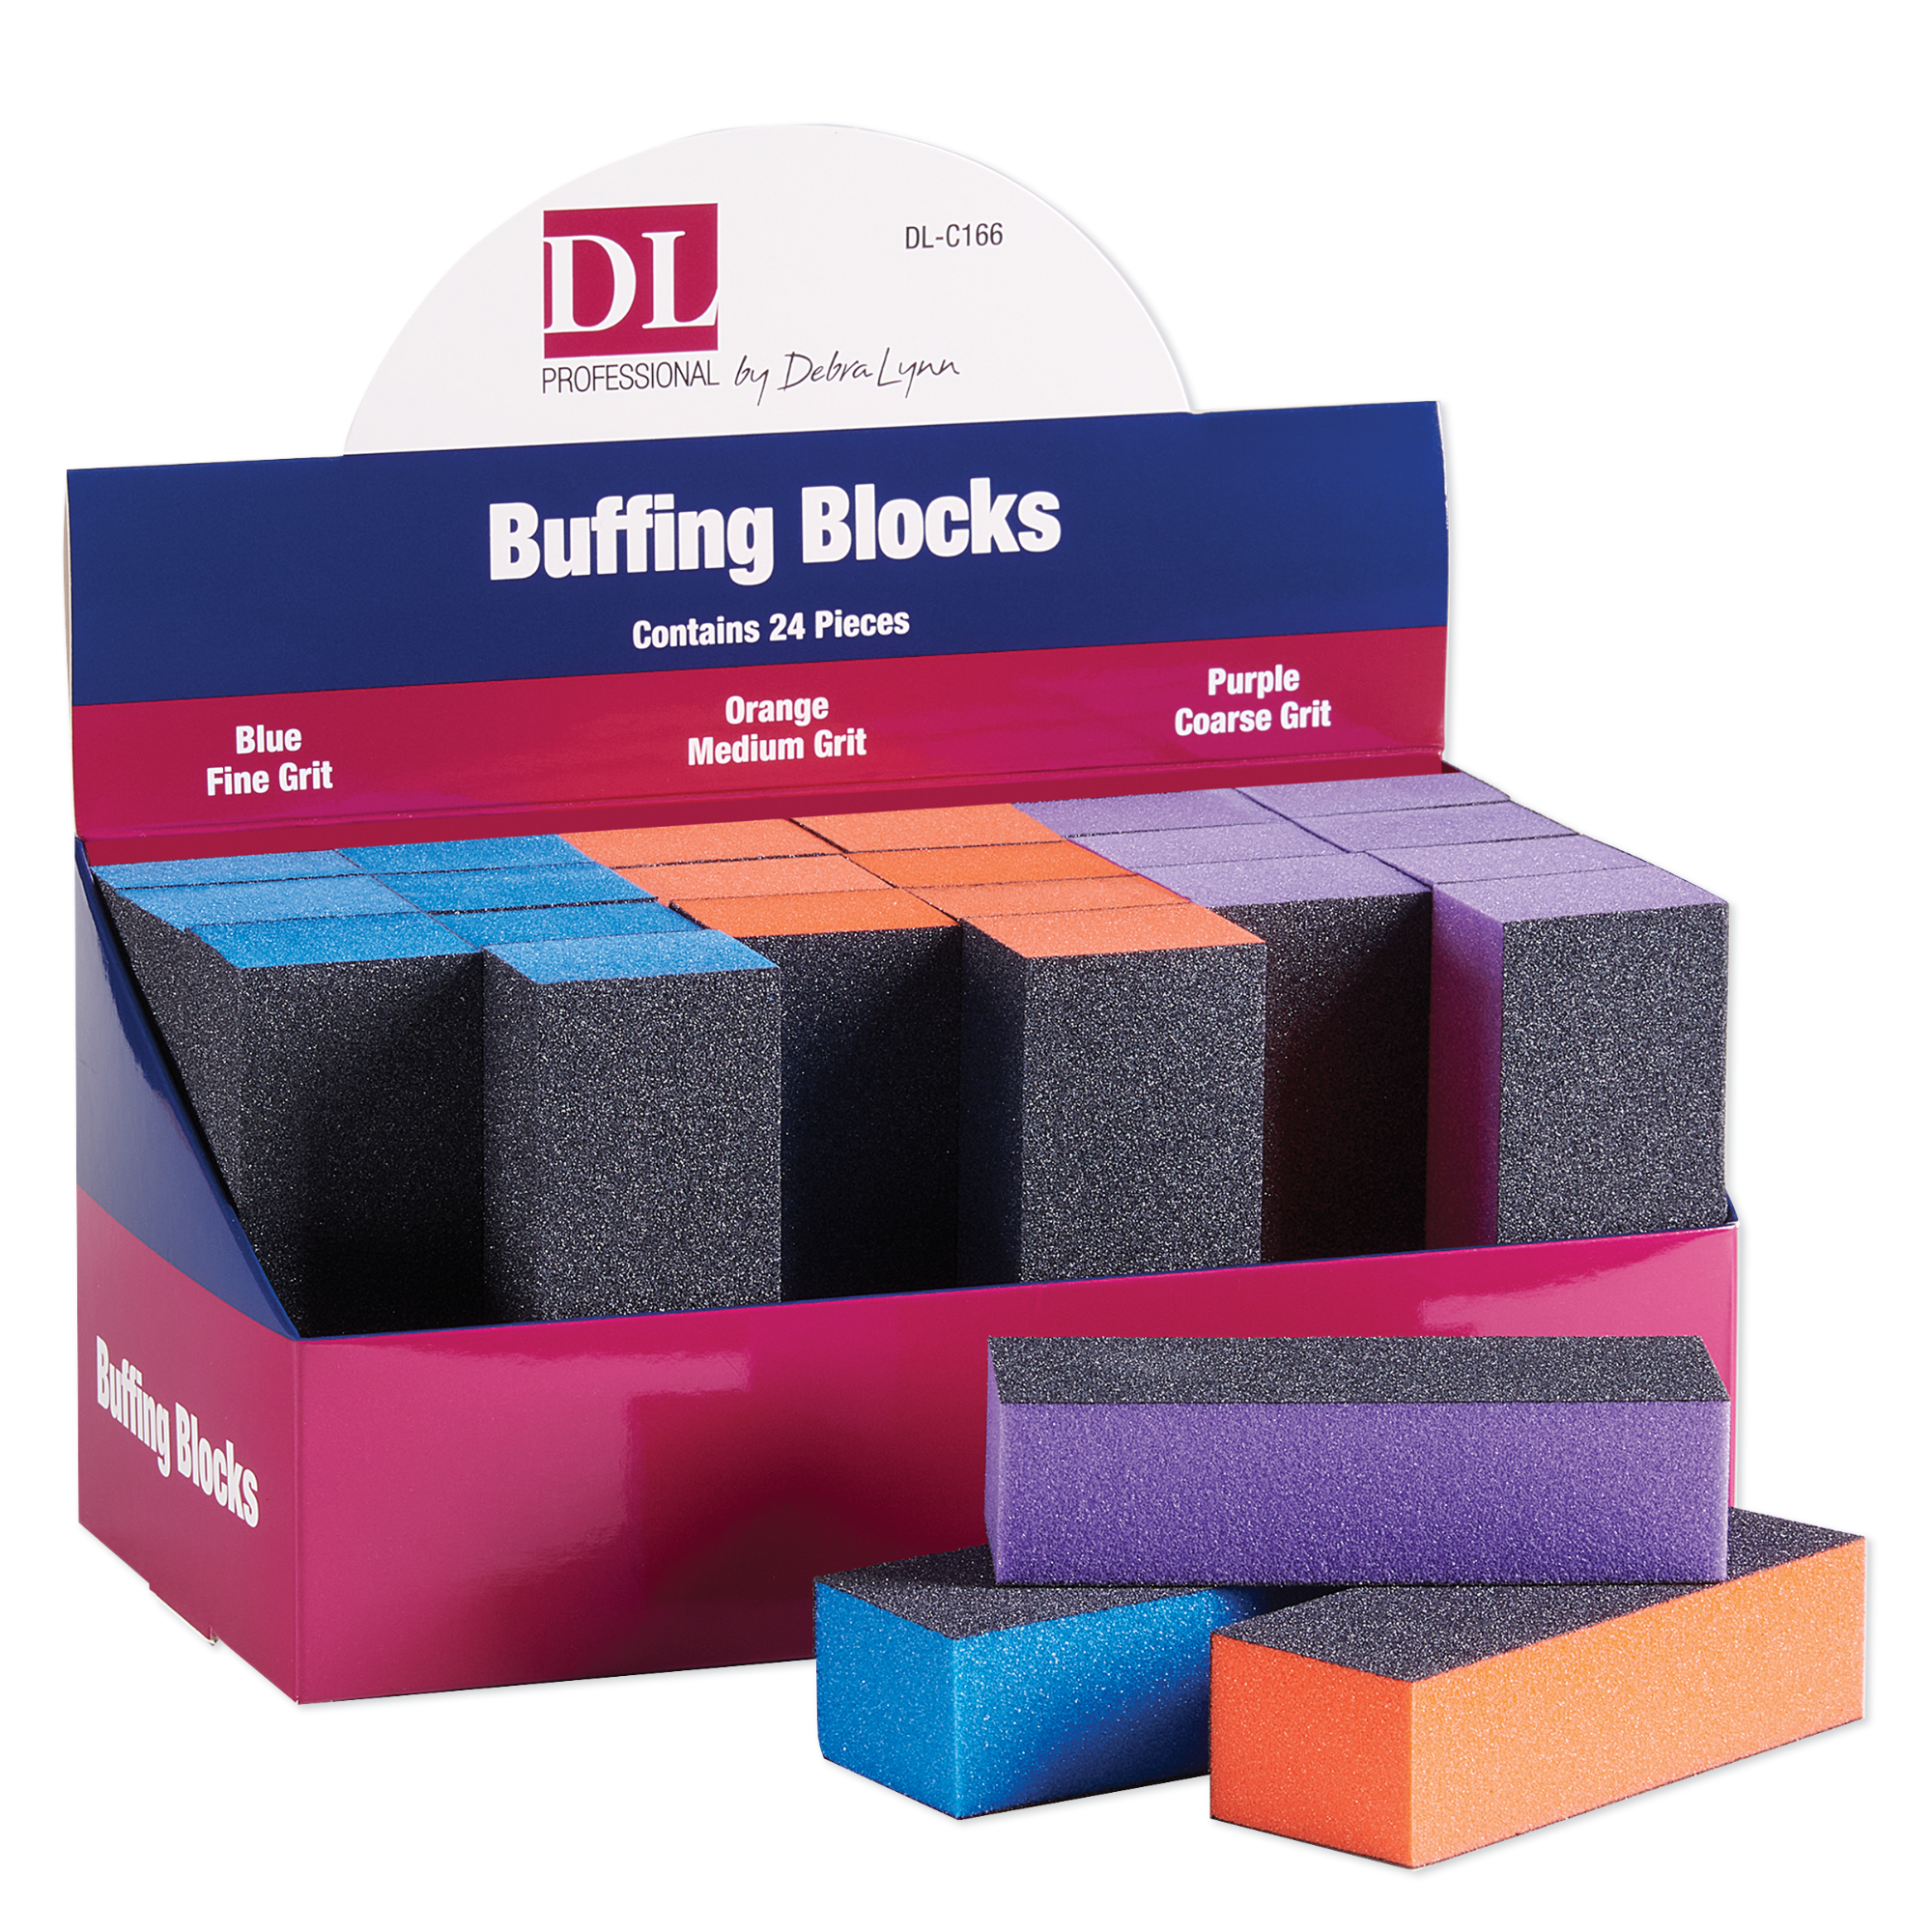 Buffing Blocks Display - 24 pc.